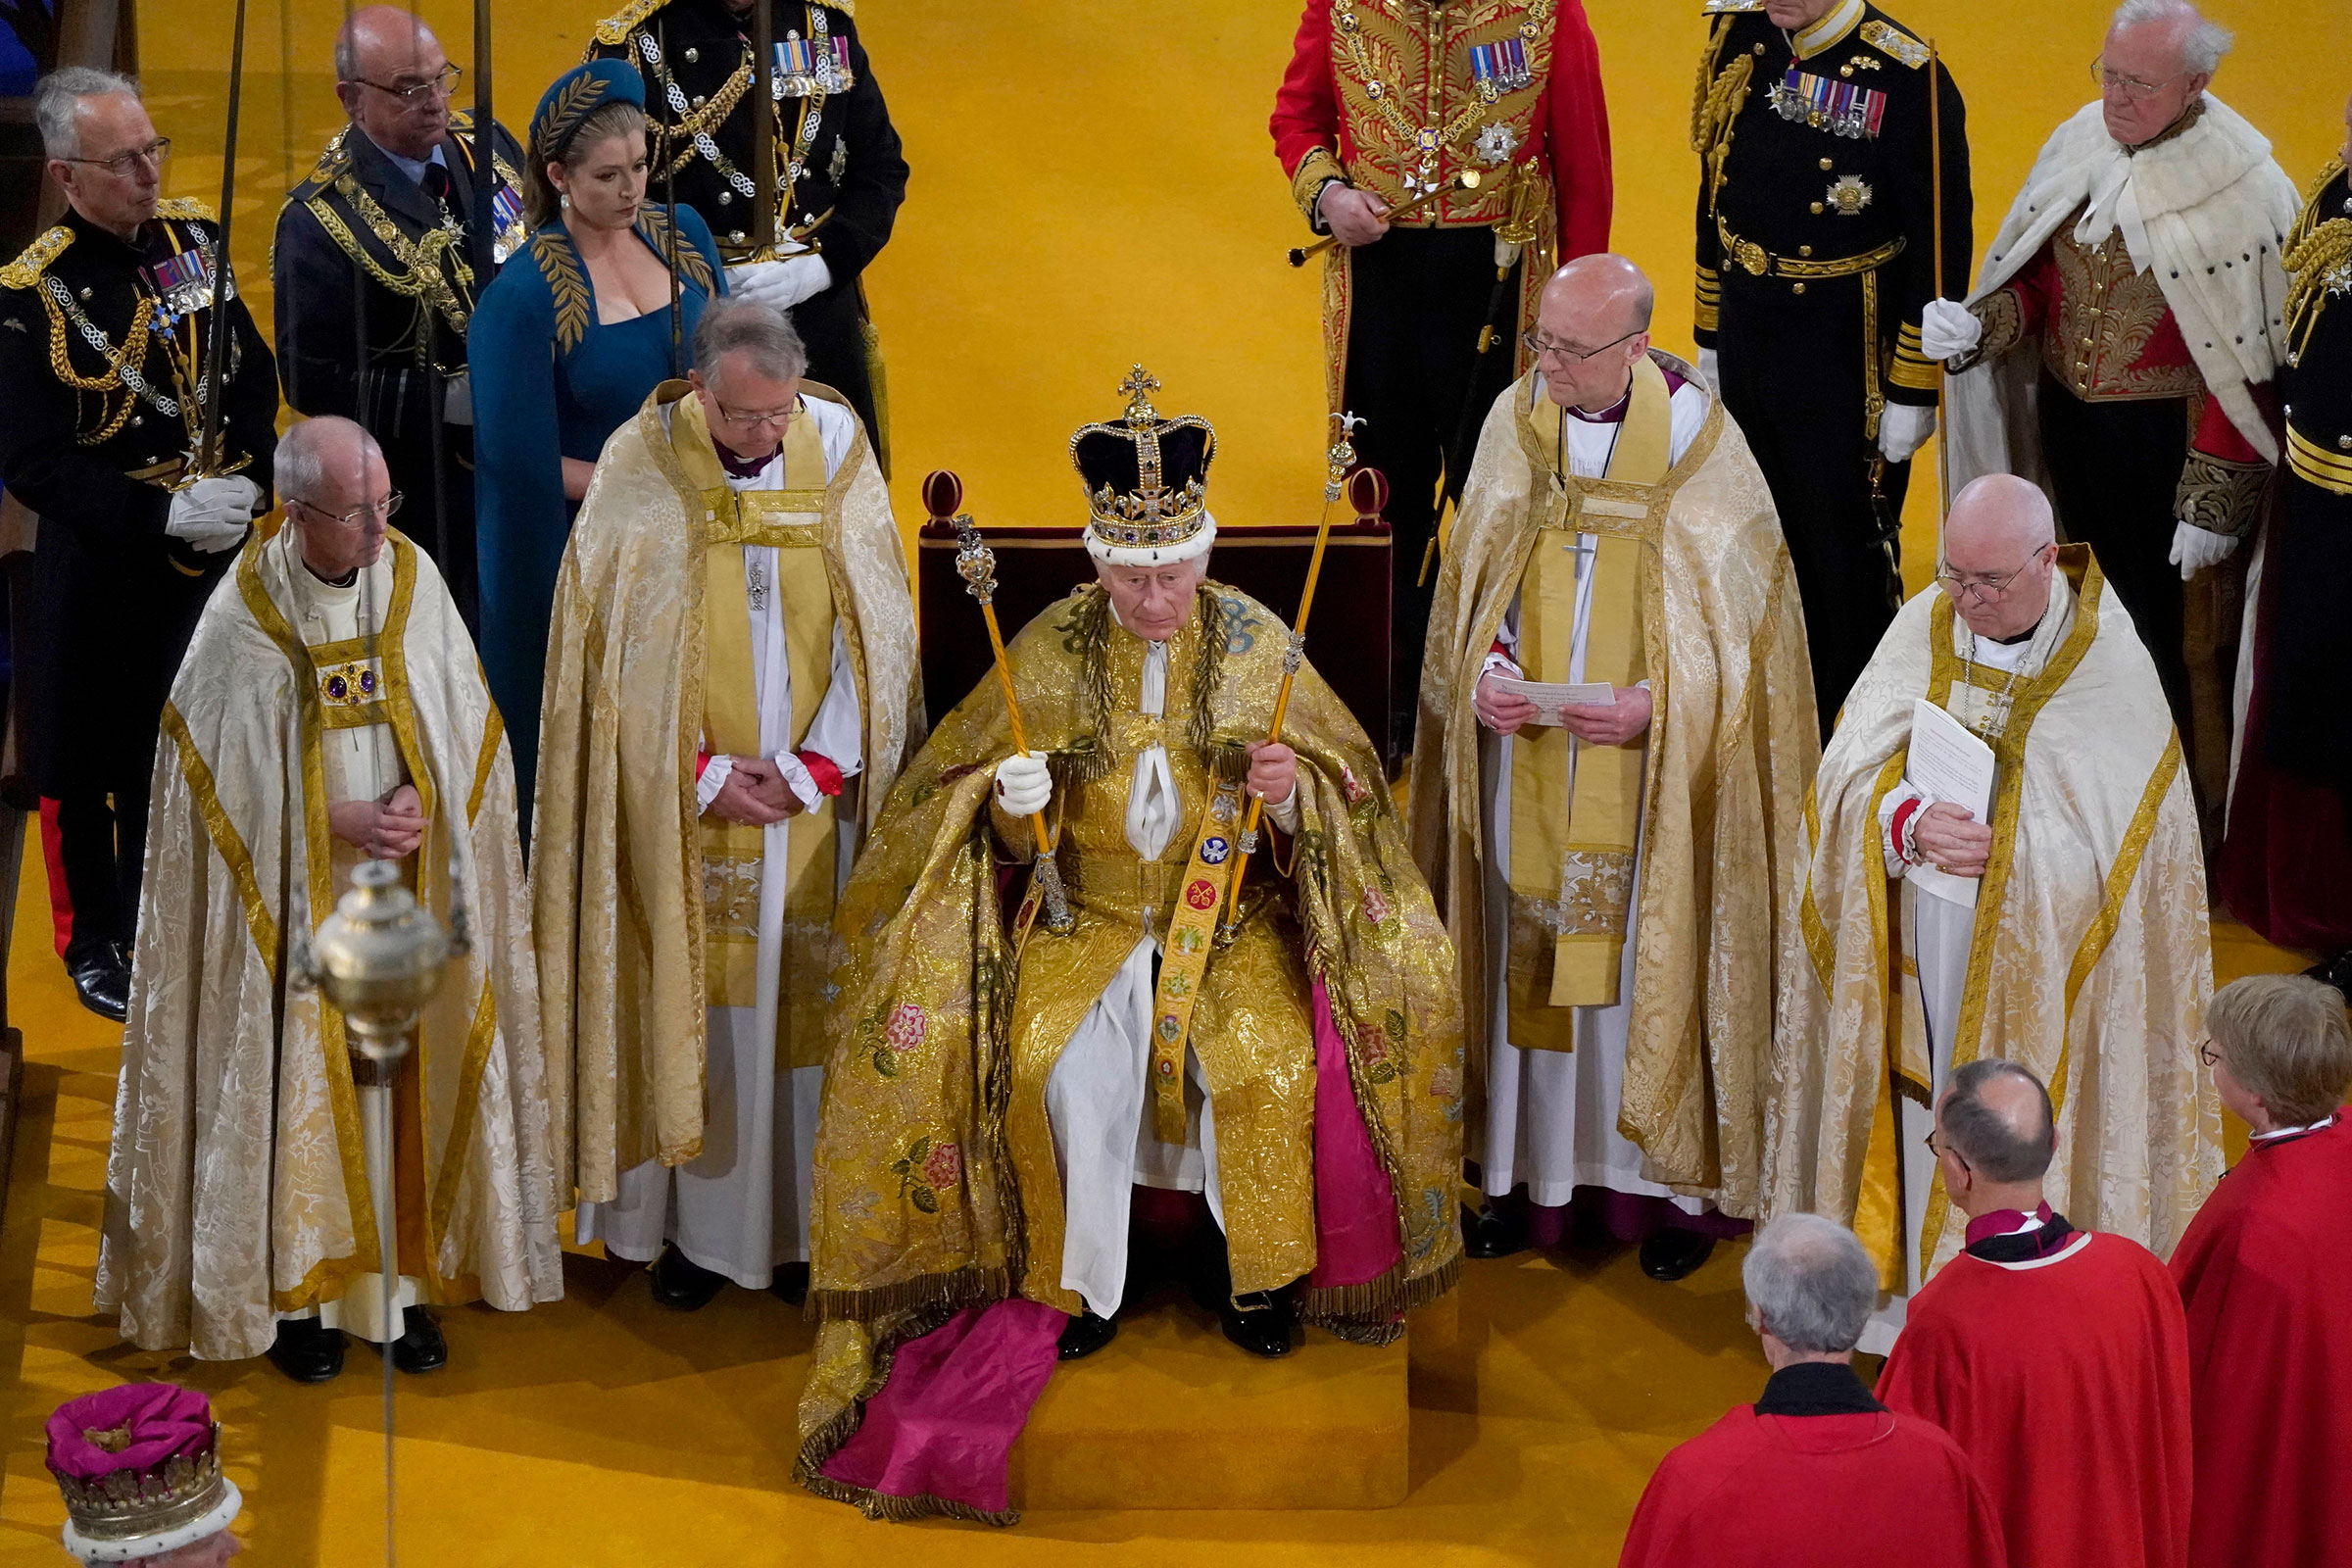 King Charles III coronation: Charles III Is Crowned King - The New